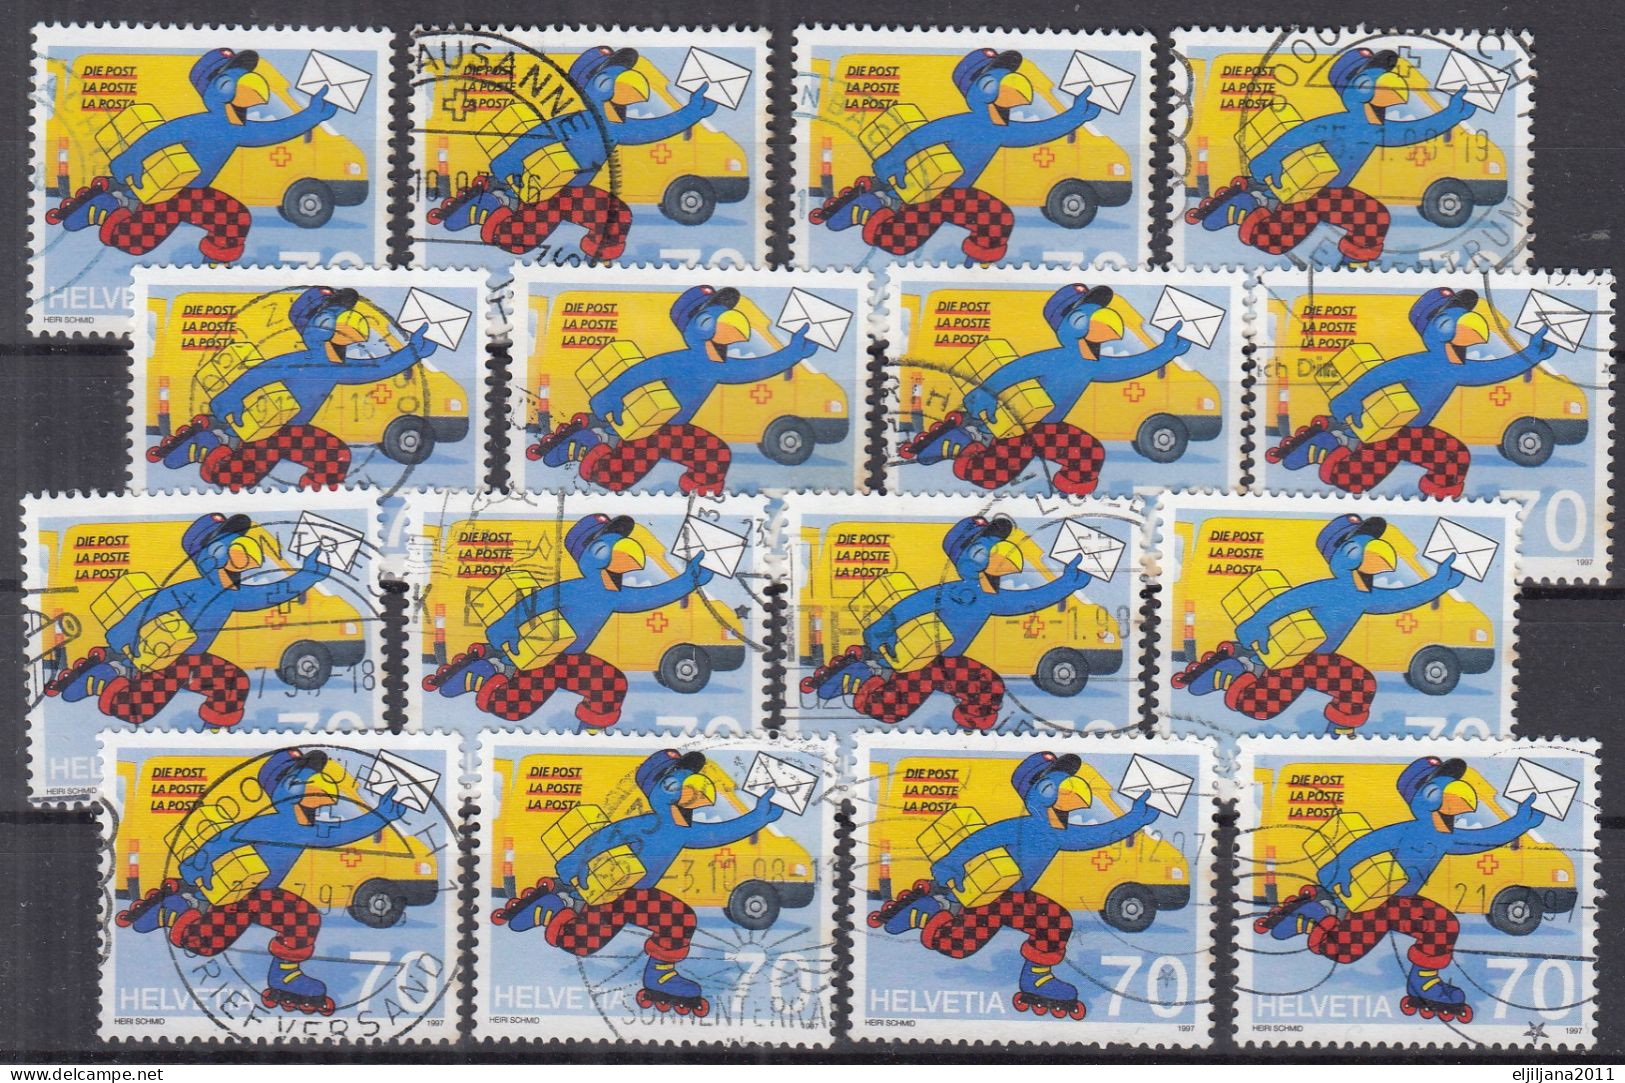 Switzerland / Helvetia / Schweiz / Suisse 1997 ⁕ Globi Bei Post / Post Man Mi.1610 ⁕ 16v Used - Usati